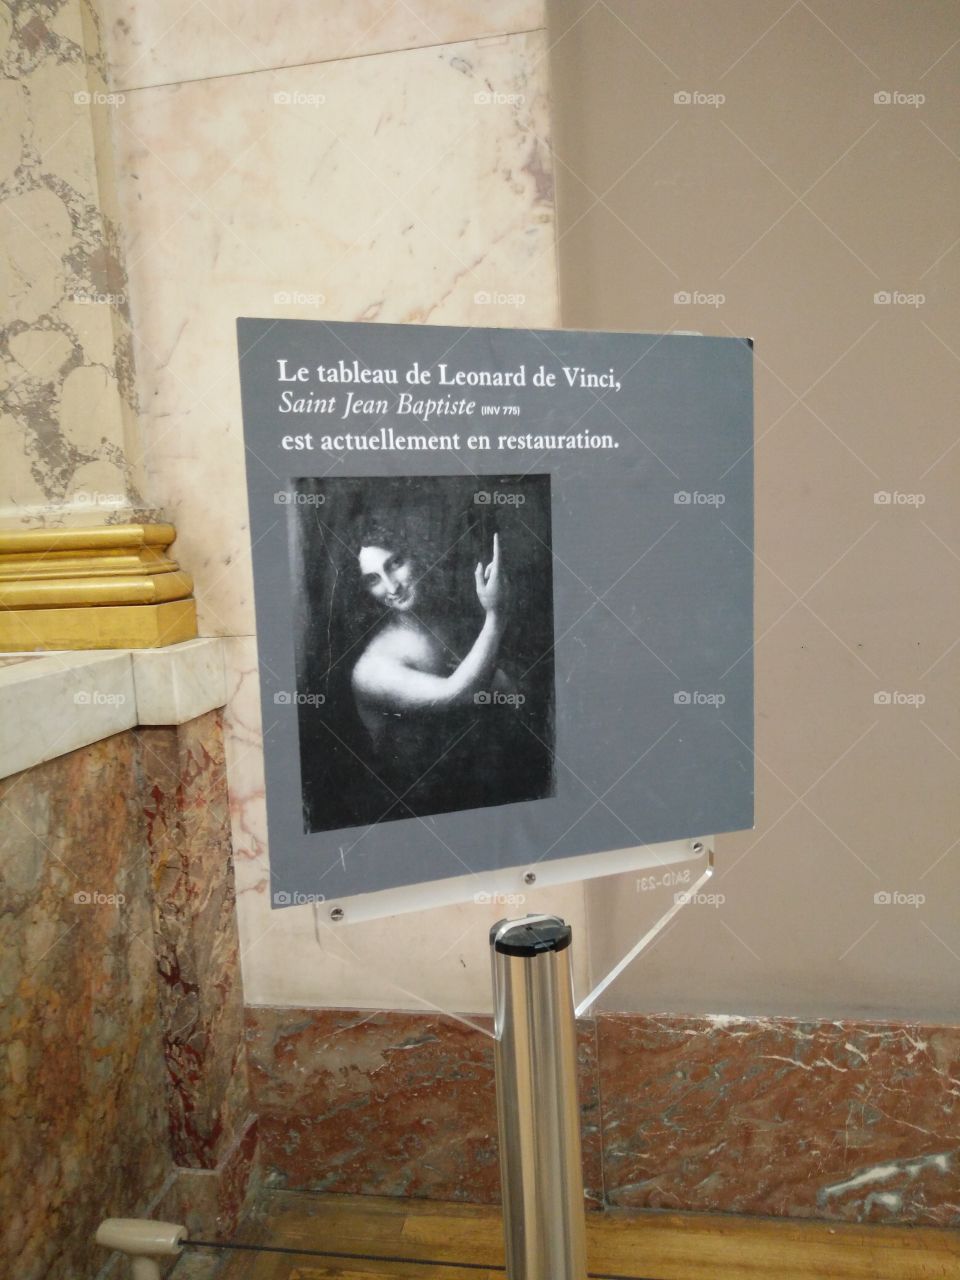 Leanardo da Vinci's unfinished work